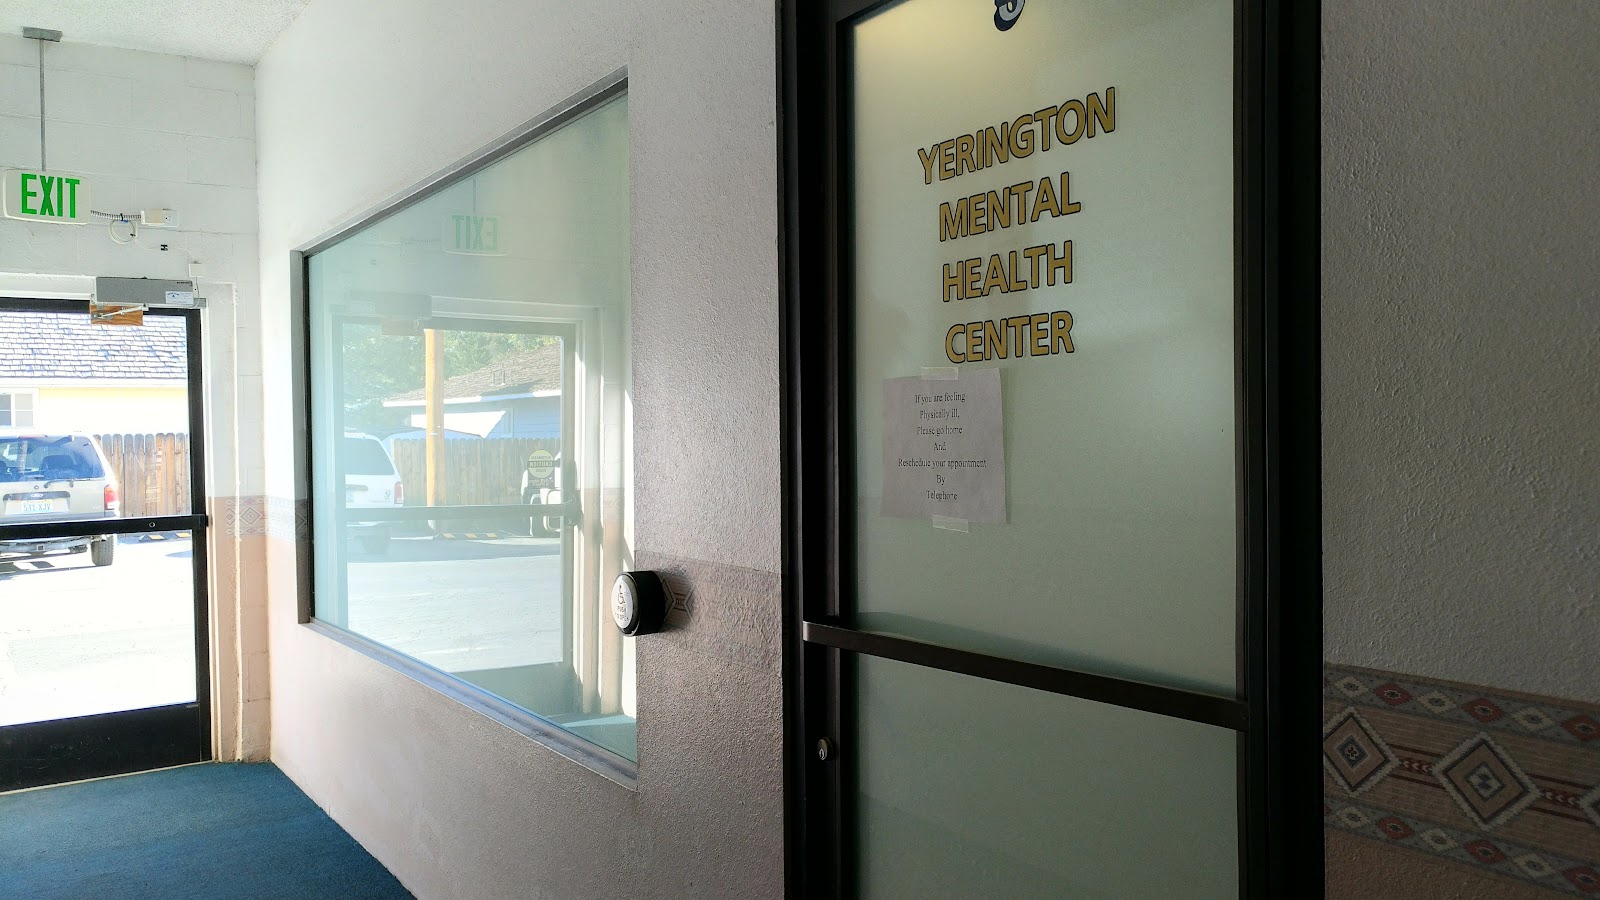 Yerington Mental Health Center